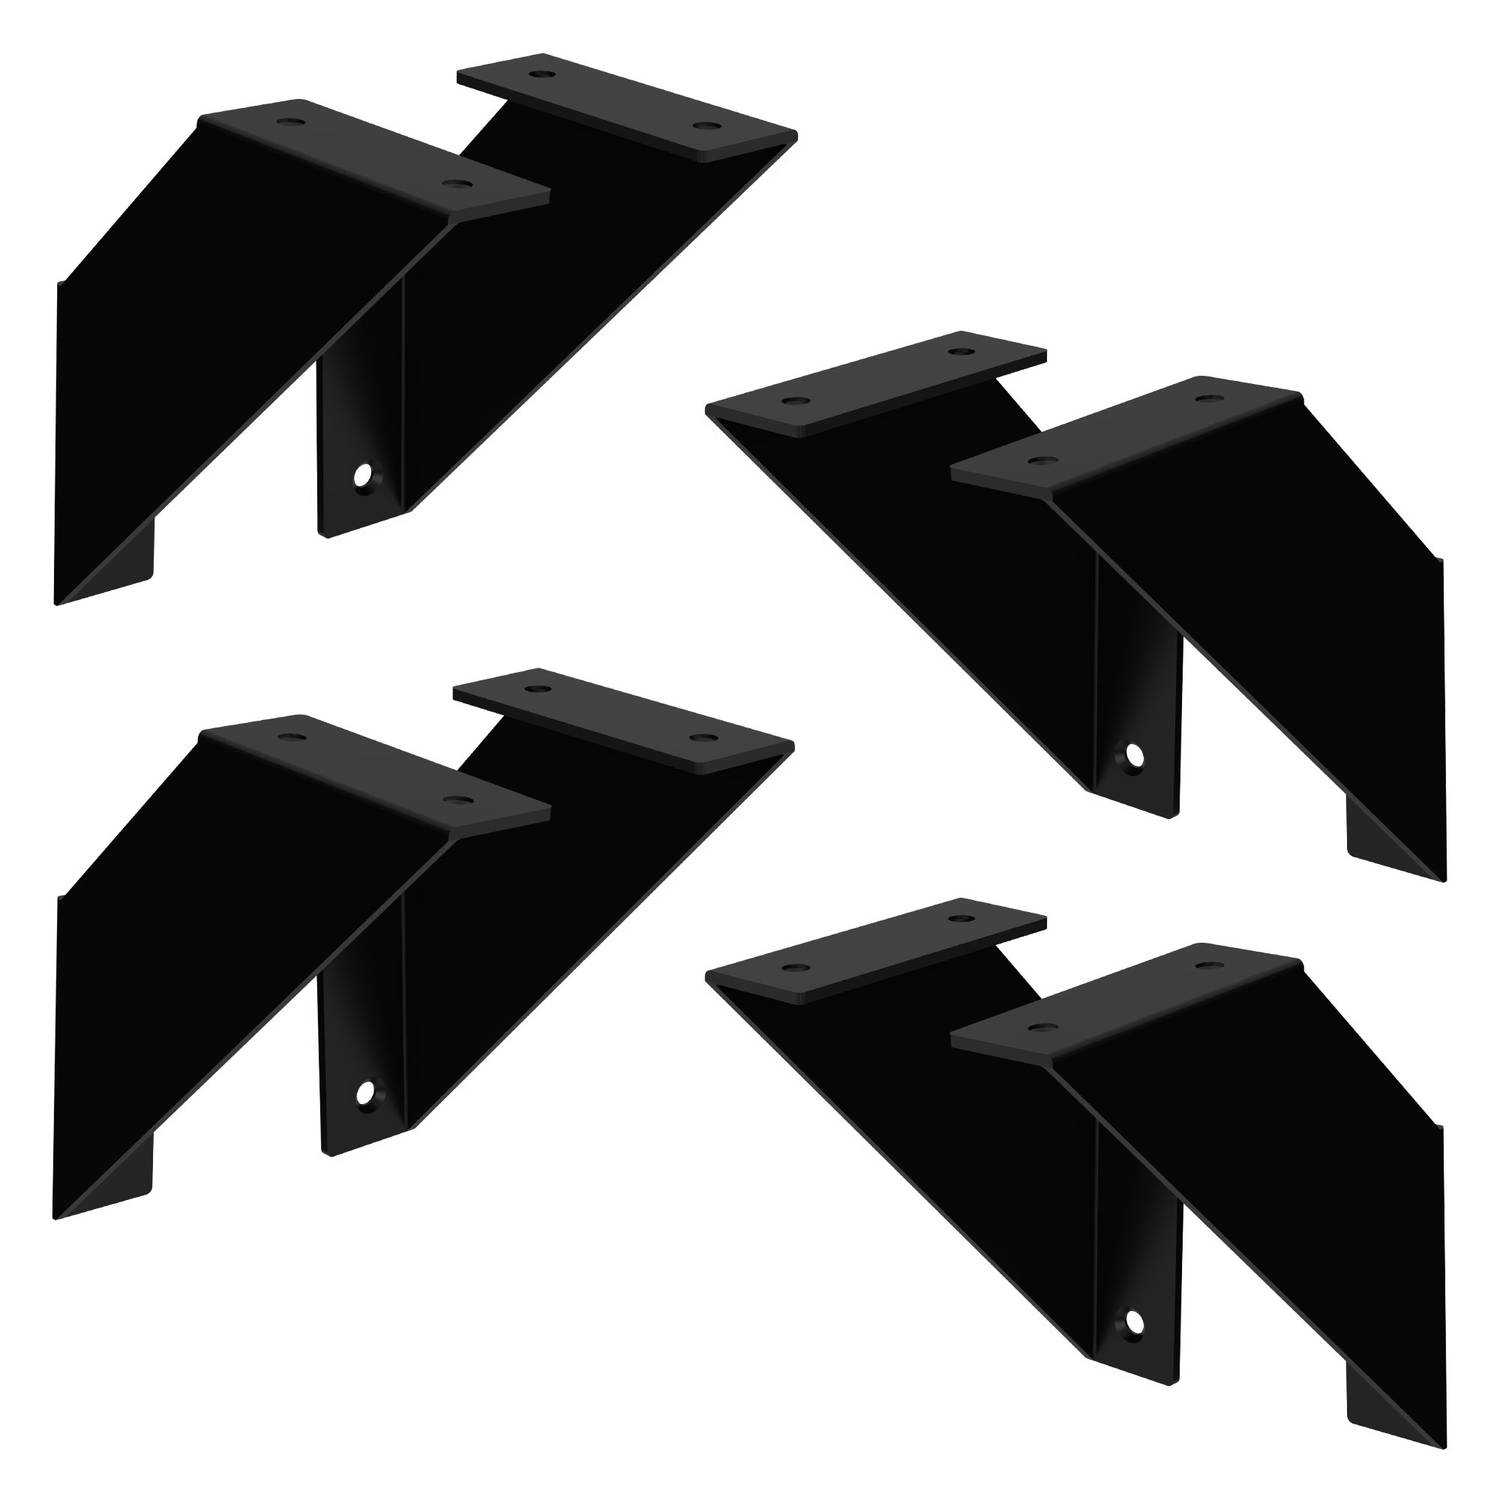 ML-Design 8 stuks plankbeugel 15 cm, zwart, metaal, driehoekige plankbeugels, zwevende plankbeugels, wandbevestiging, 90° wandbeugel, planksteun wandplank wandbeugel hangplank plan